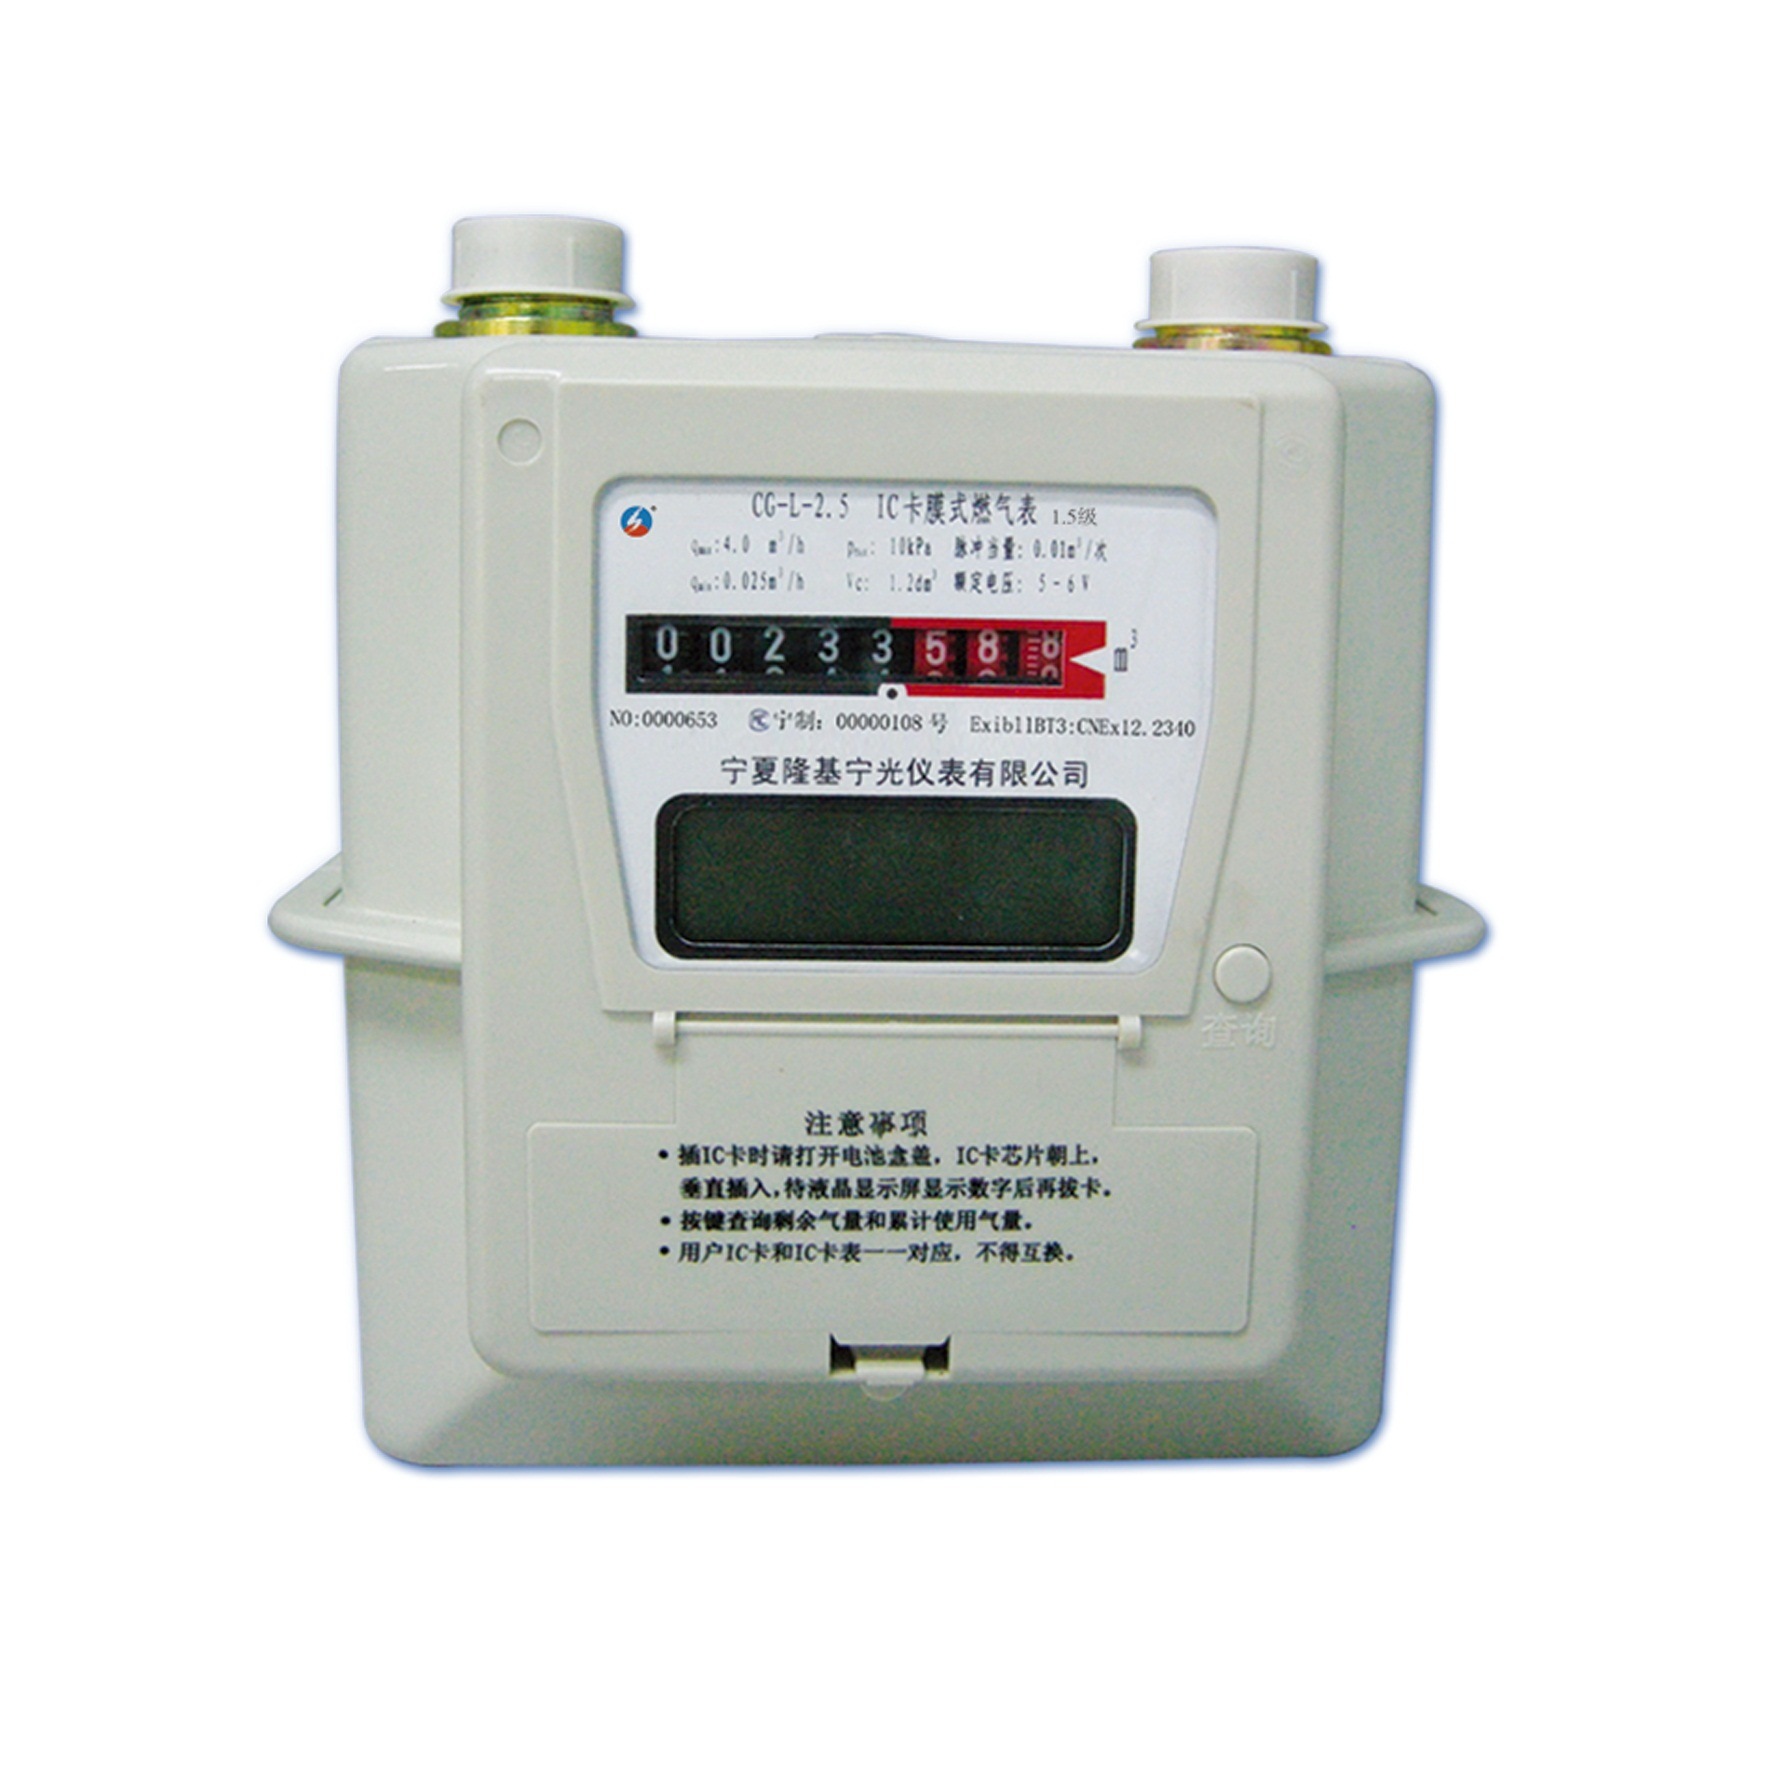 IC Card Volumetric Pricing Gas Meter